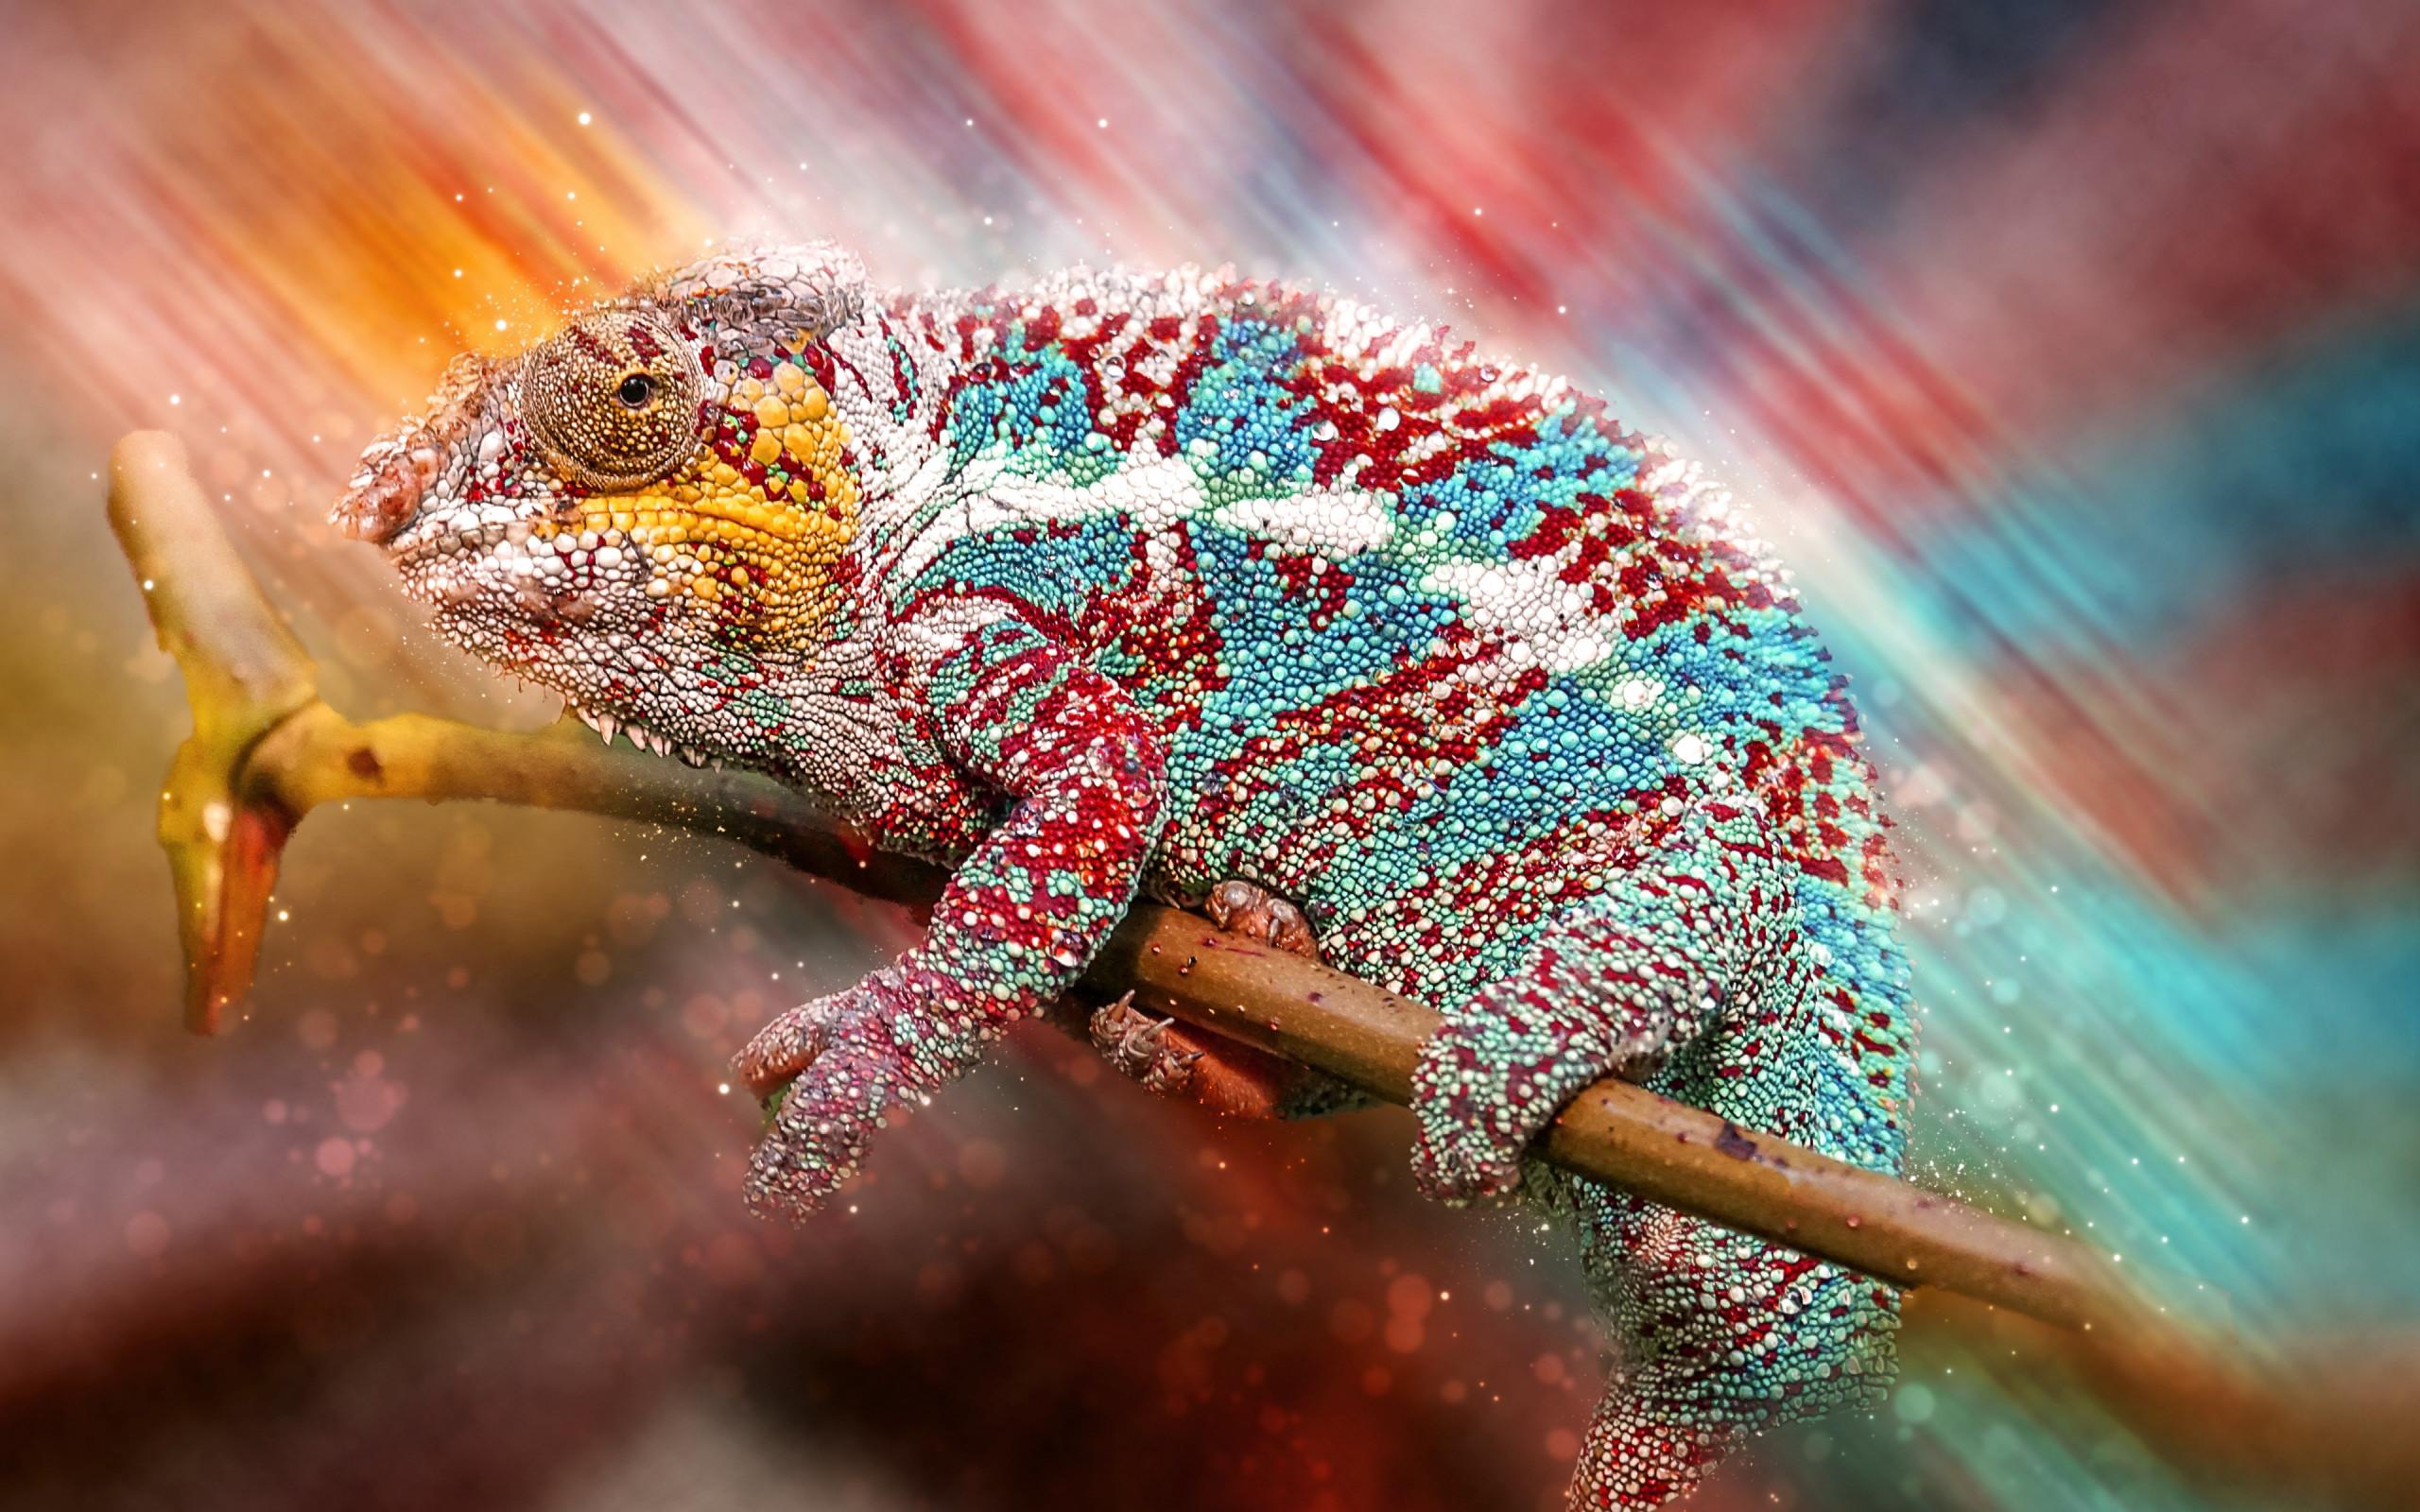 Download wallpaper: Panther chameleon 2560x1600